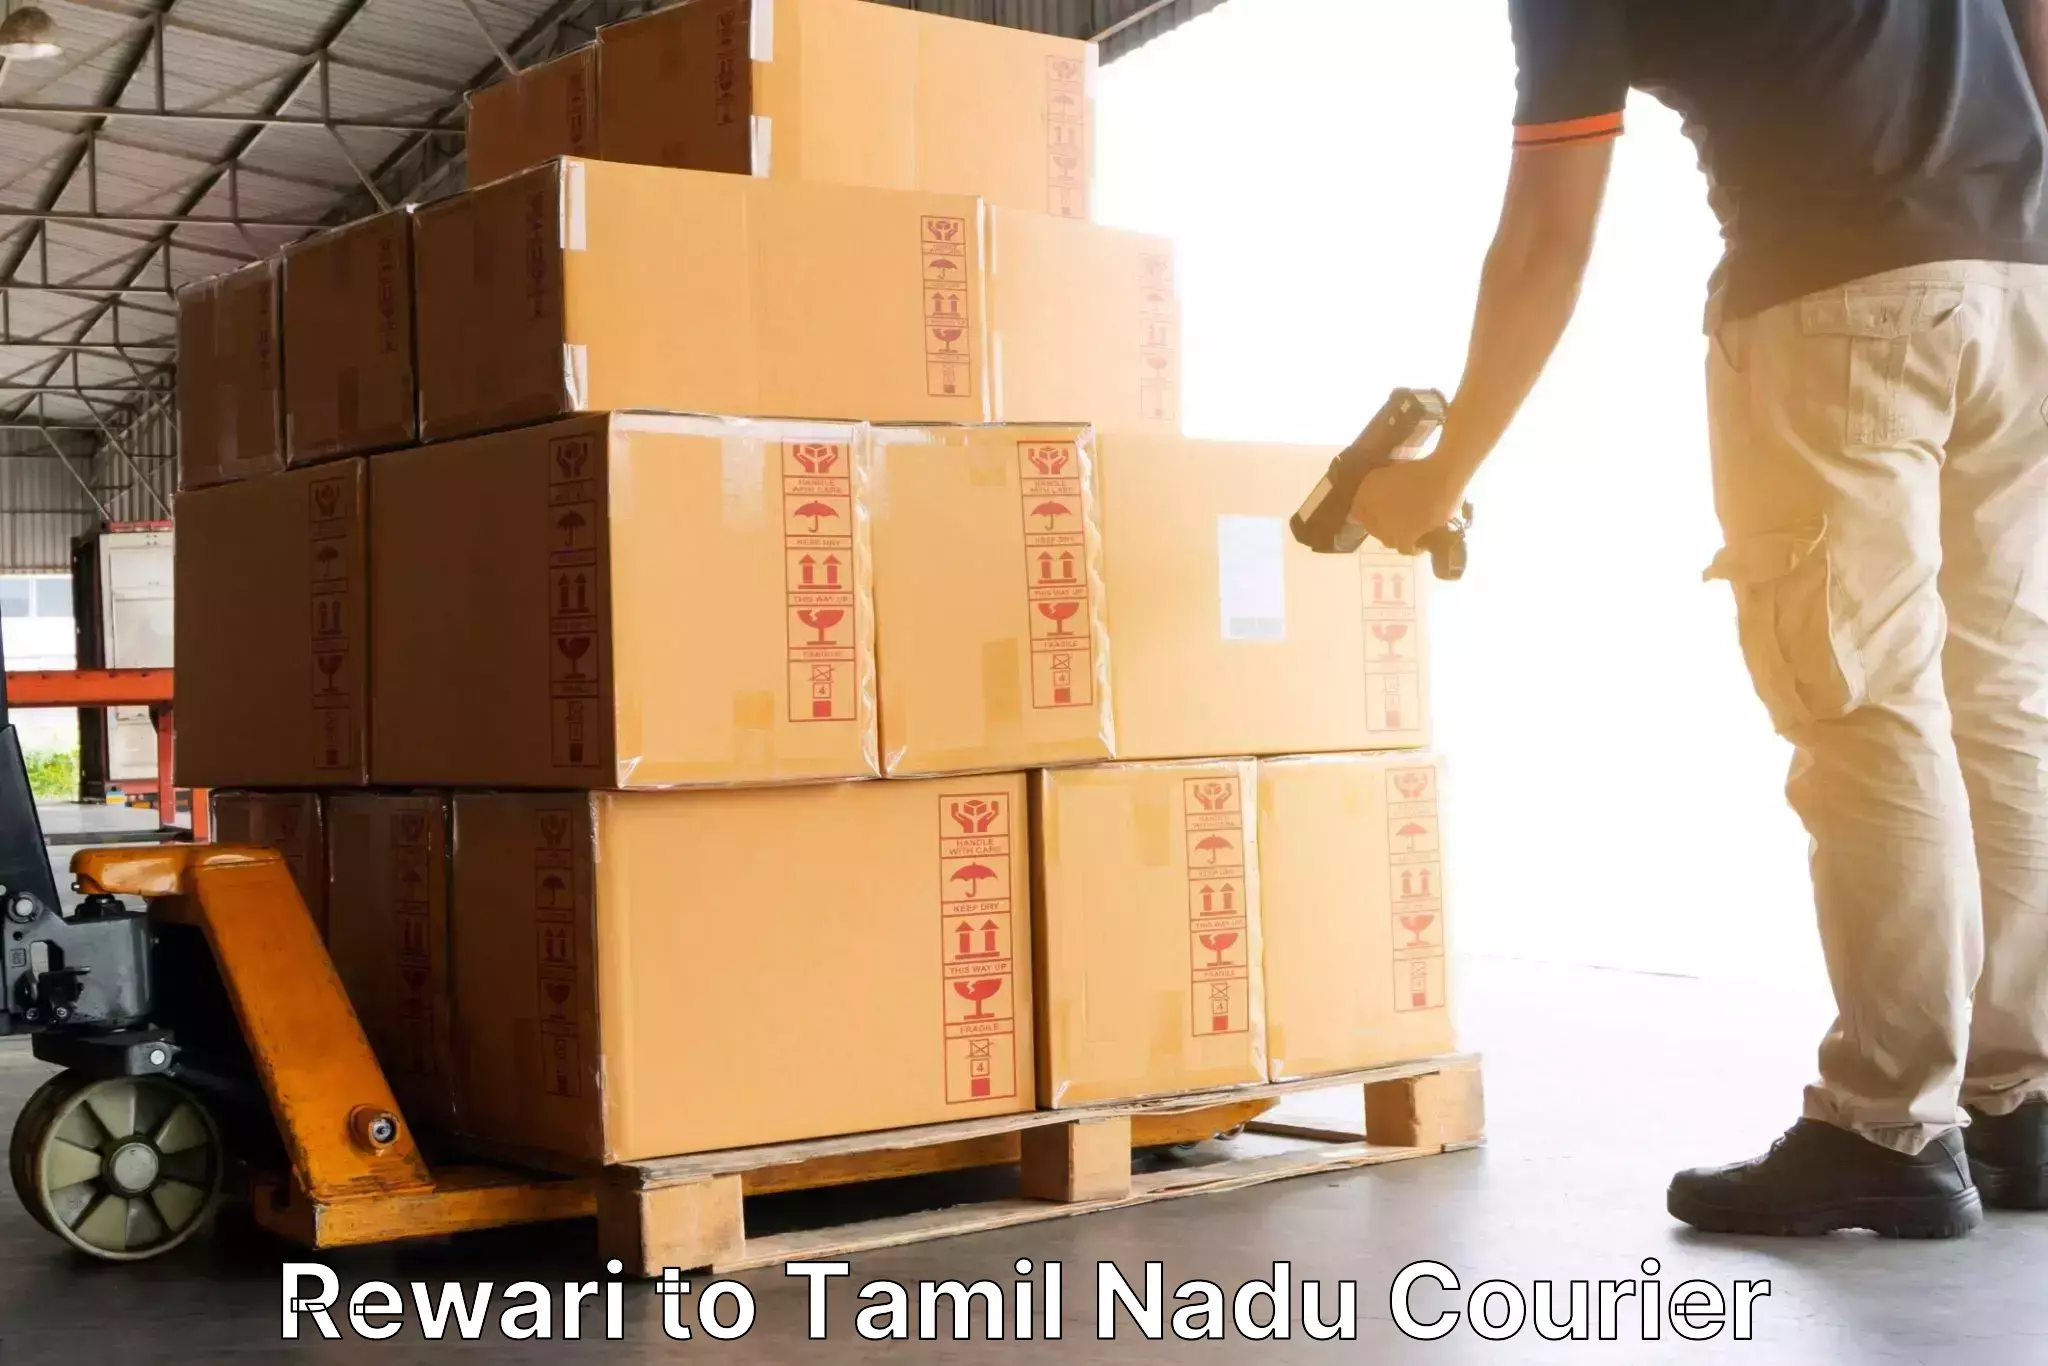 High-capacity parcel service Rewari to Chennai